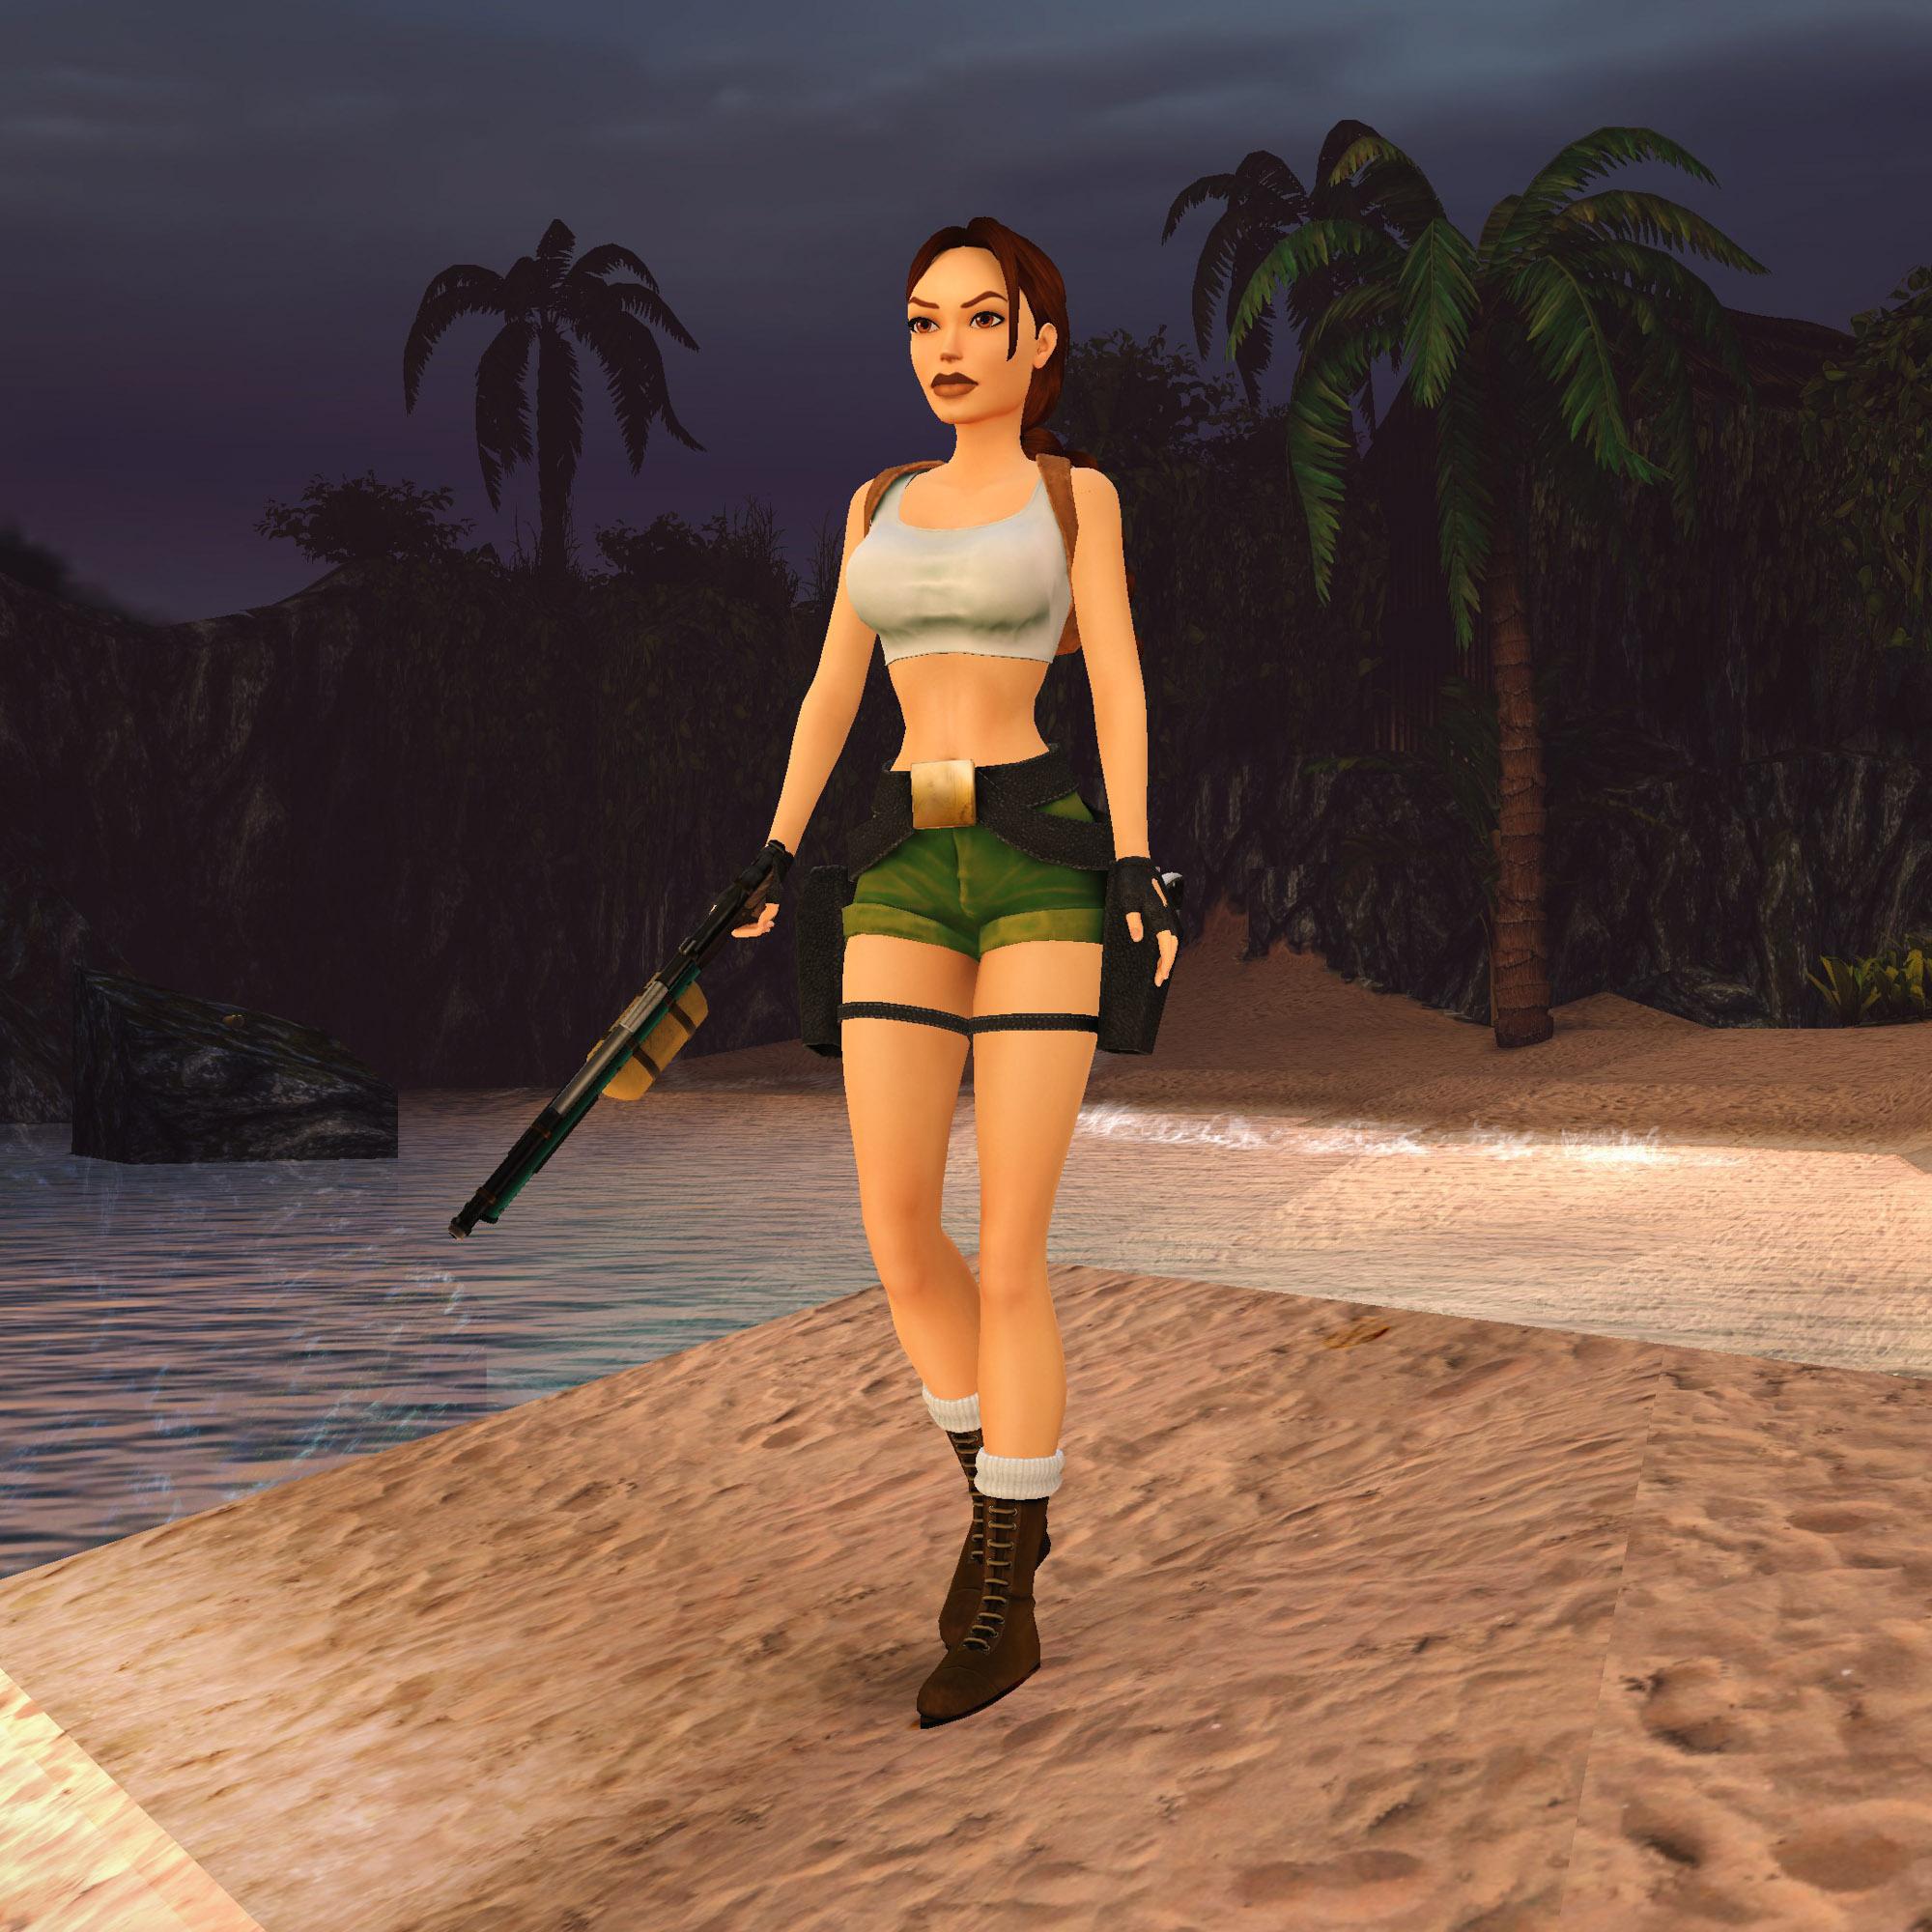 Lara Croft in the South Pacific, holding a harpoon gun.